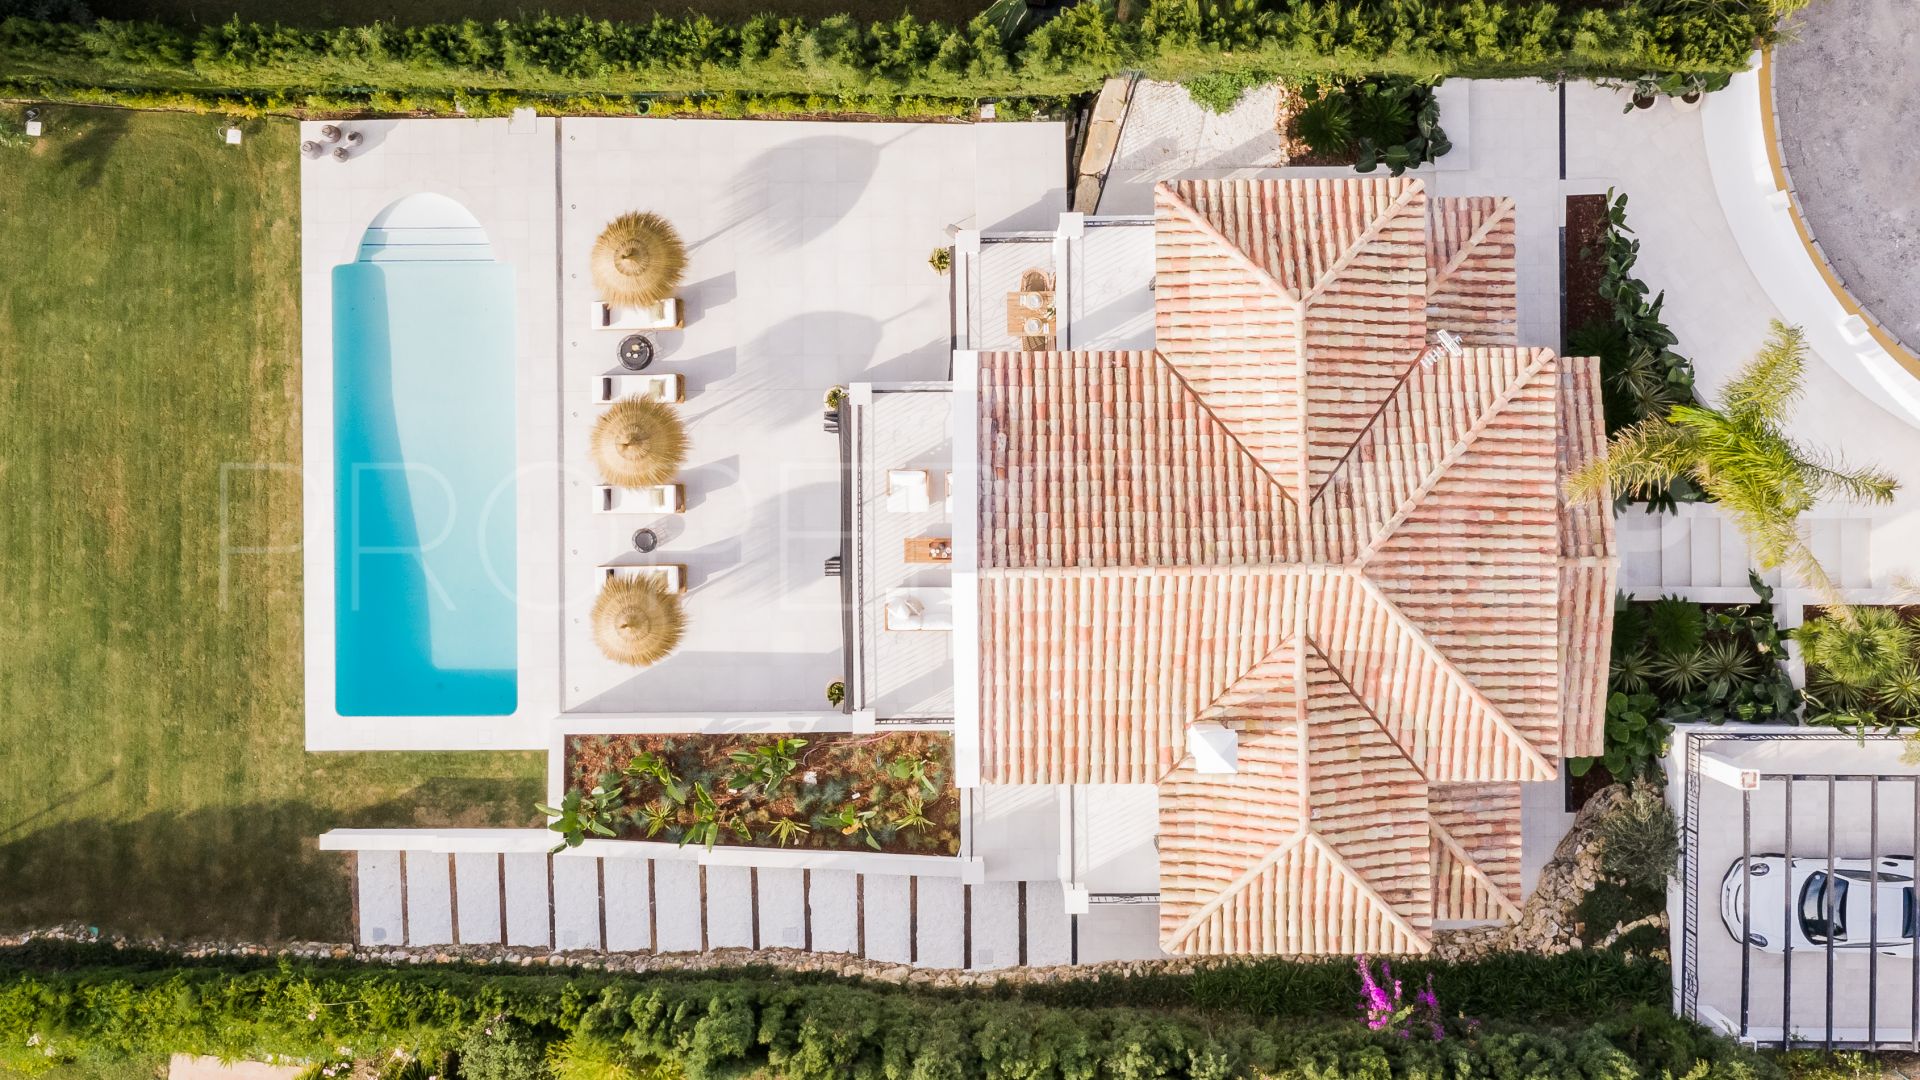 For sale villa in Puerto del Capitan with 6 bedrooms